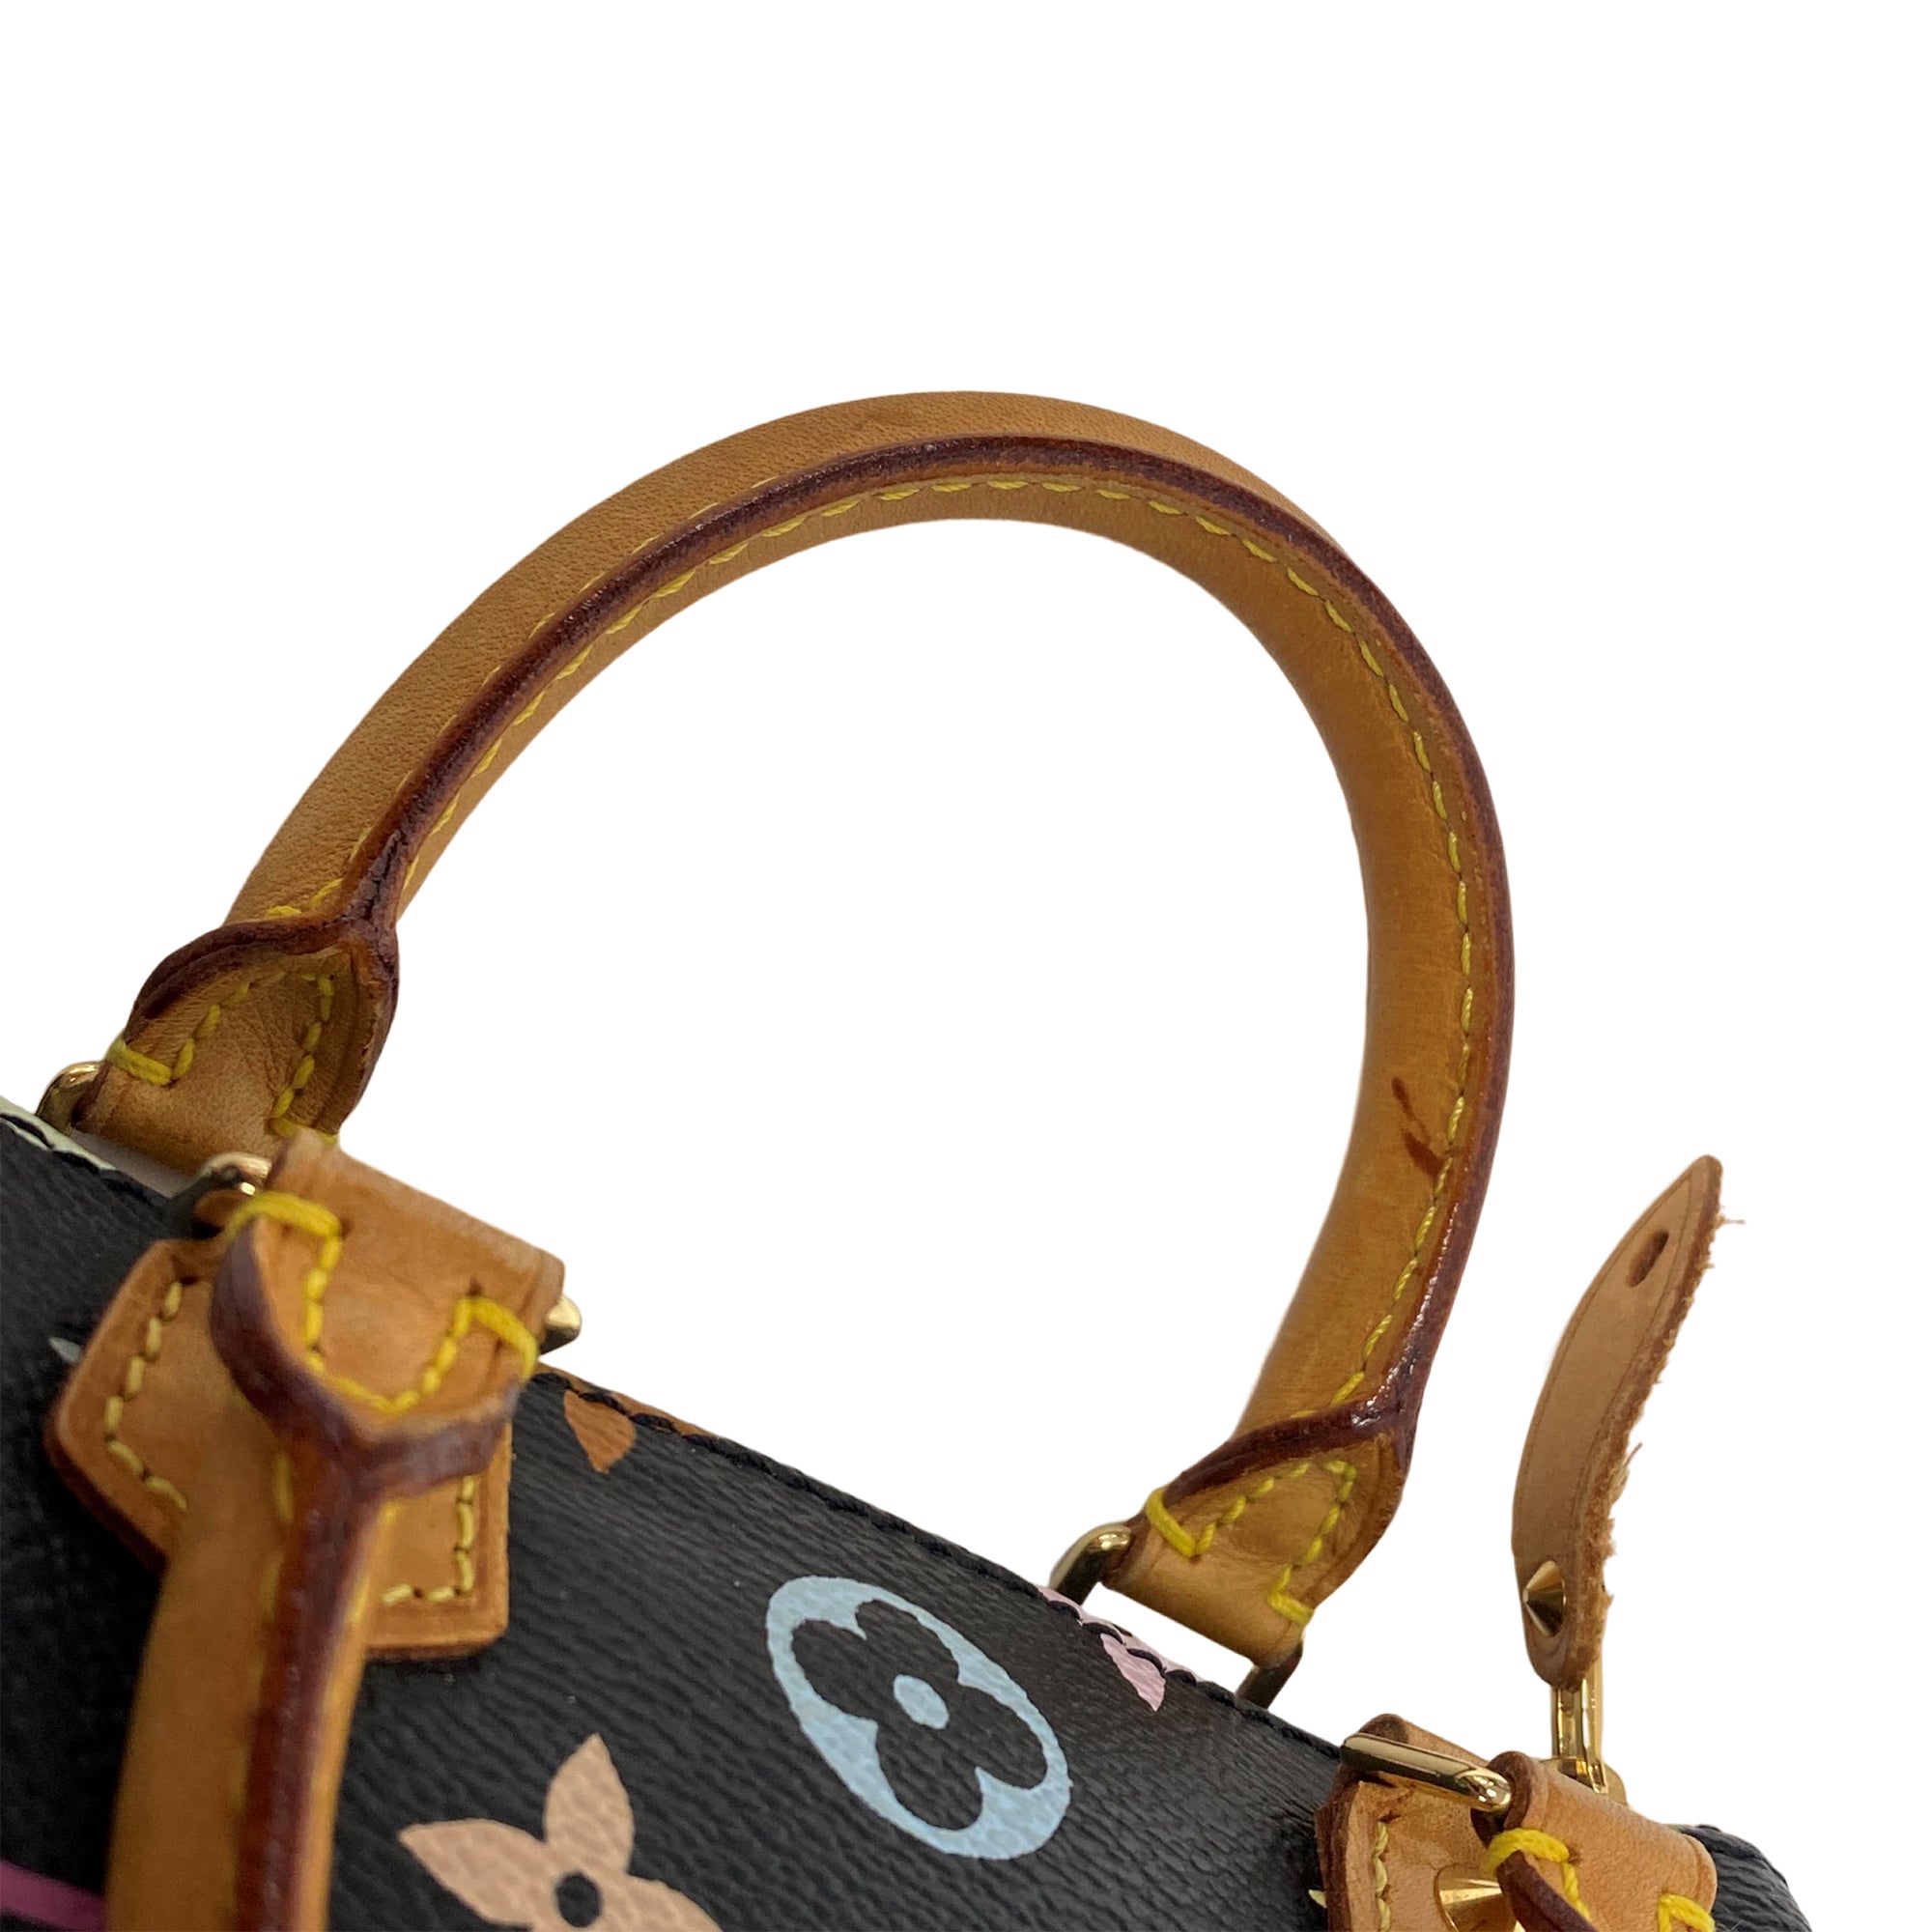 LOUIS VUITTON Handbag M40709 Speedy round 2WAY Shoulder Bag Mini Boston  Vui